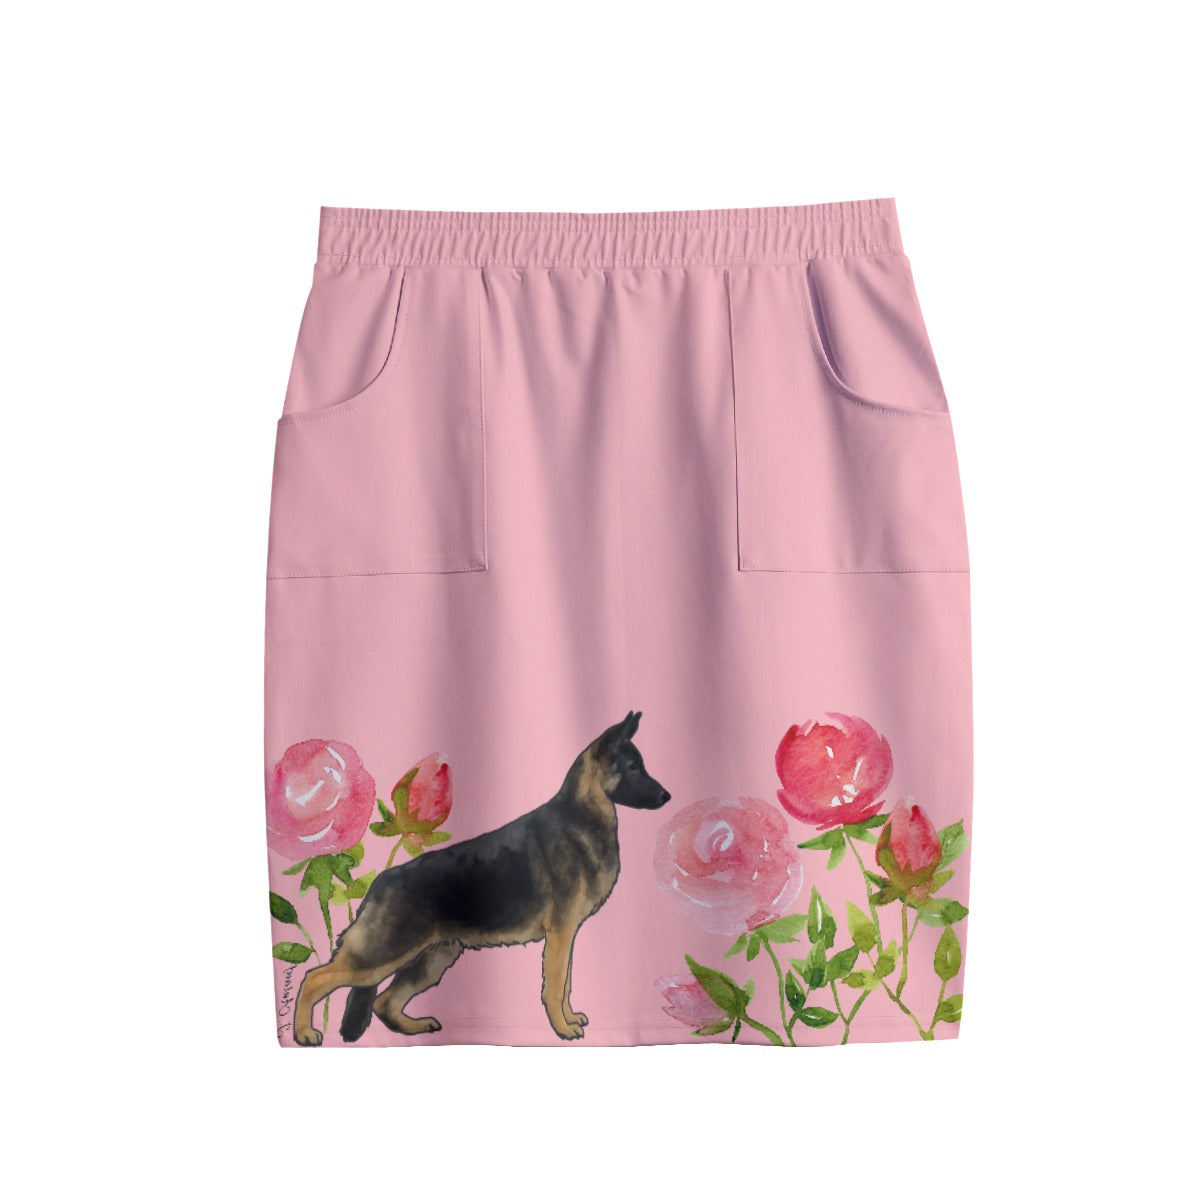 Women's Stretch Pencil Skirt